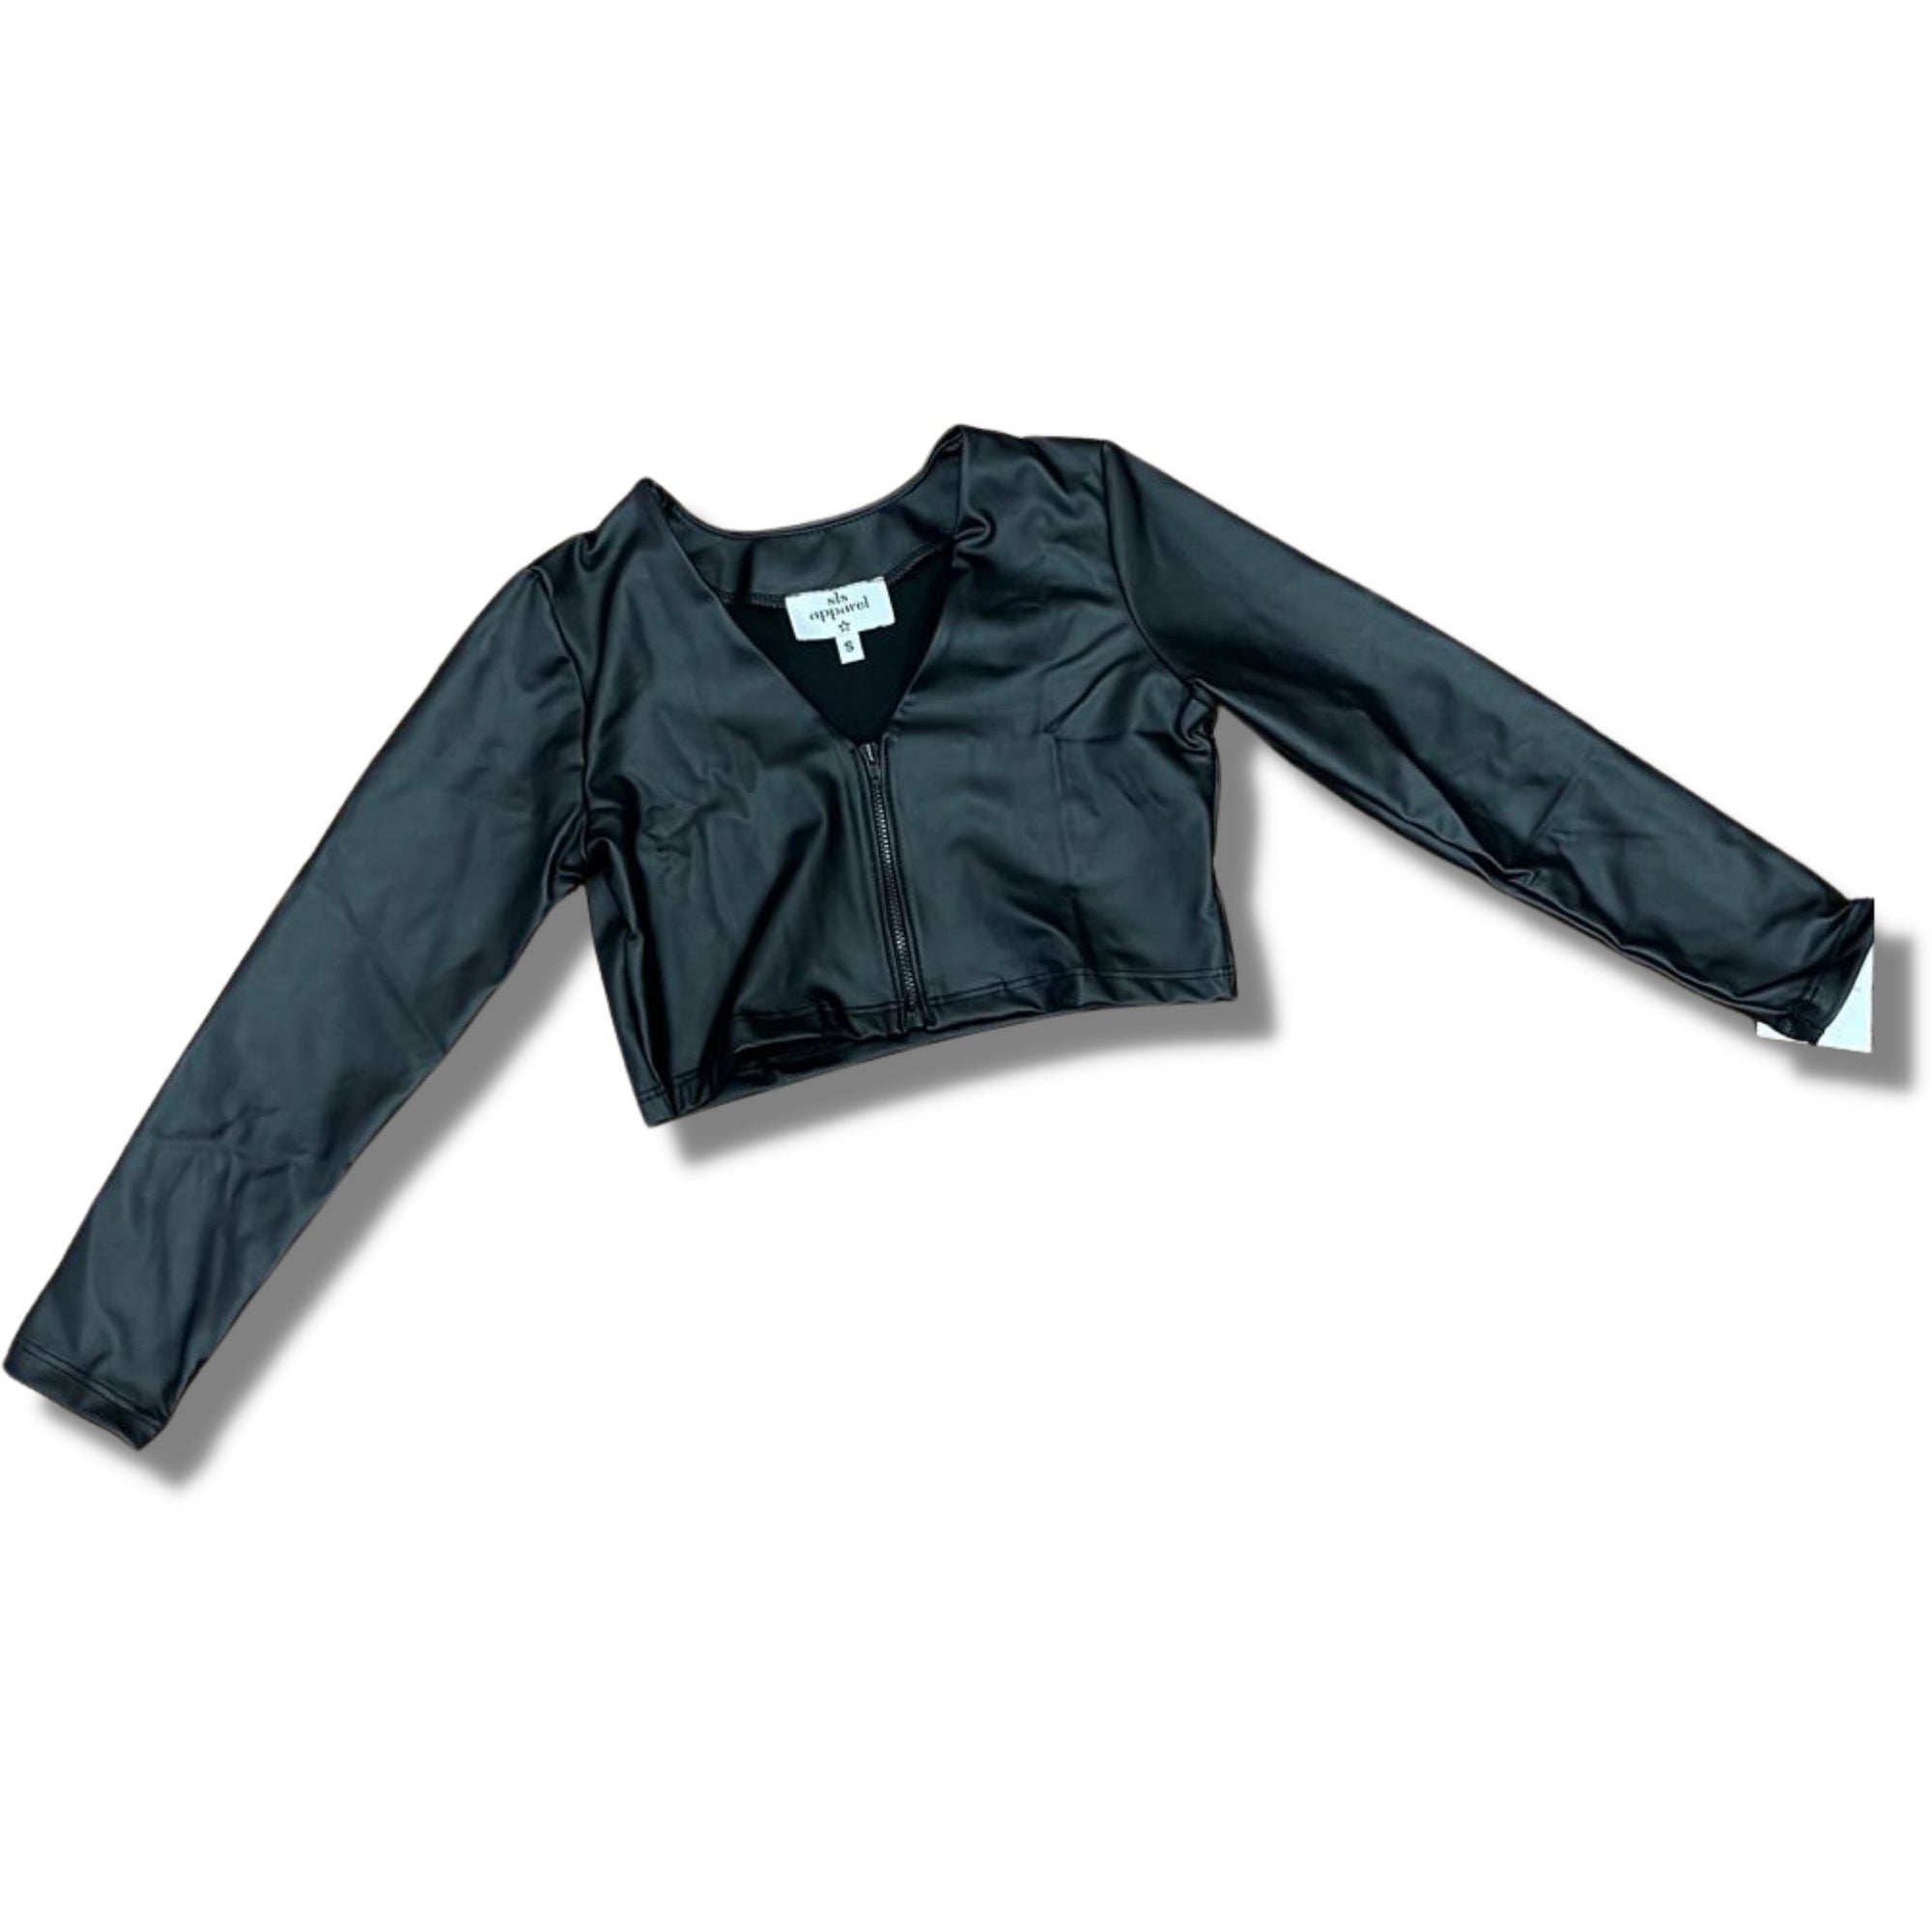 SLS Apparel Black Pleather Zip Cardigan - a Spirit Animal - Cardigan $45-$60 7/8 black